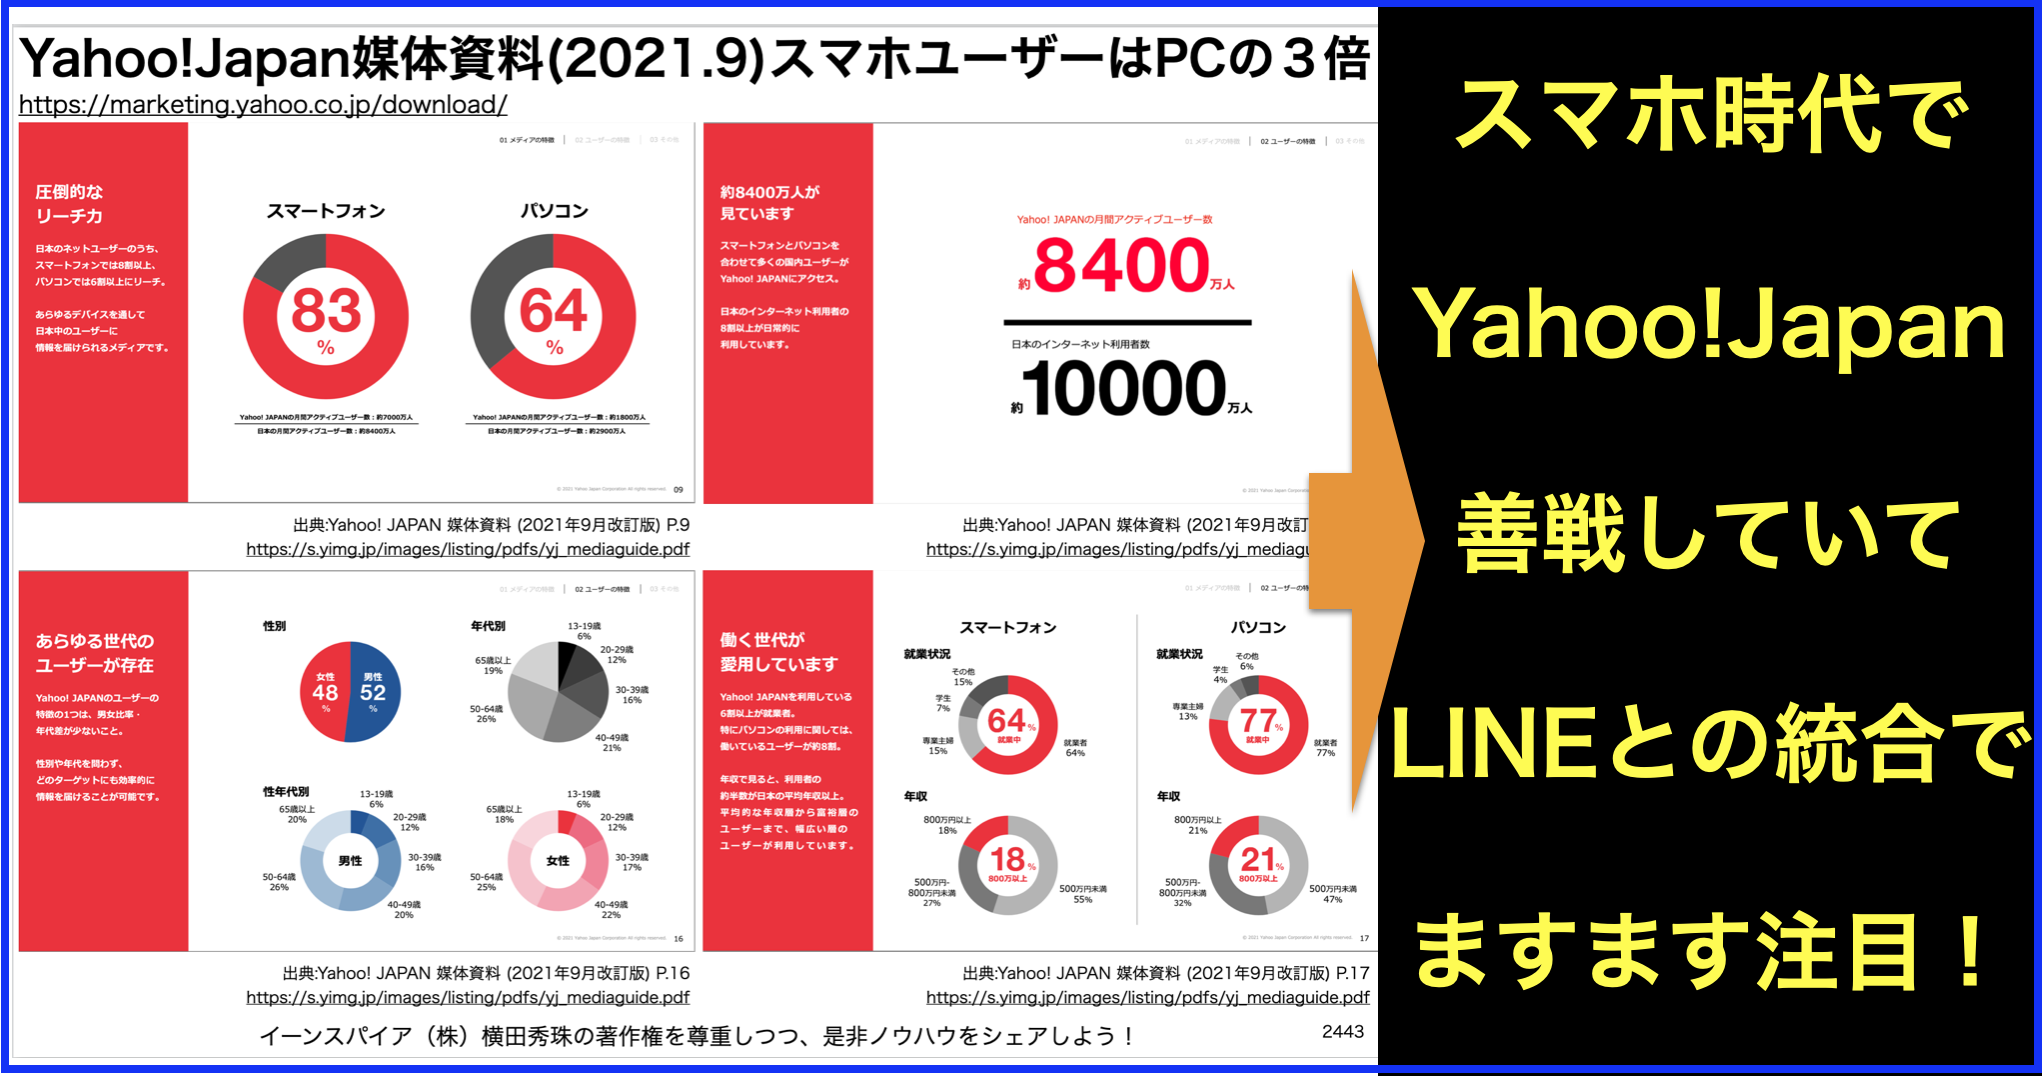 Yahoo!JAPAN媒体資料(2021年9月)⇒スマホ利用がPC3倍